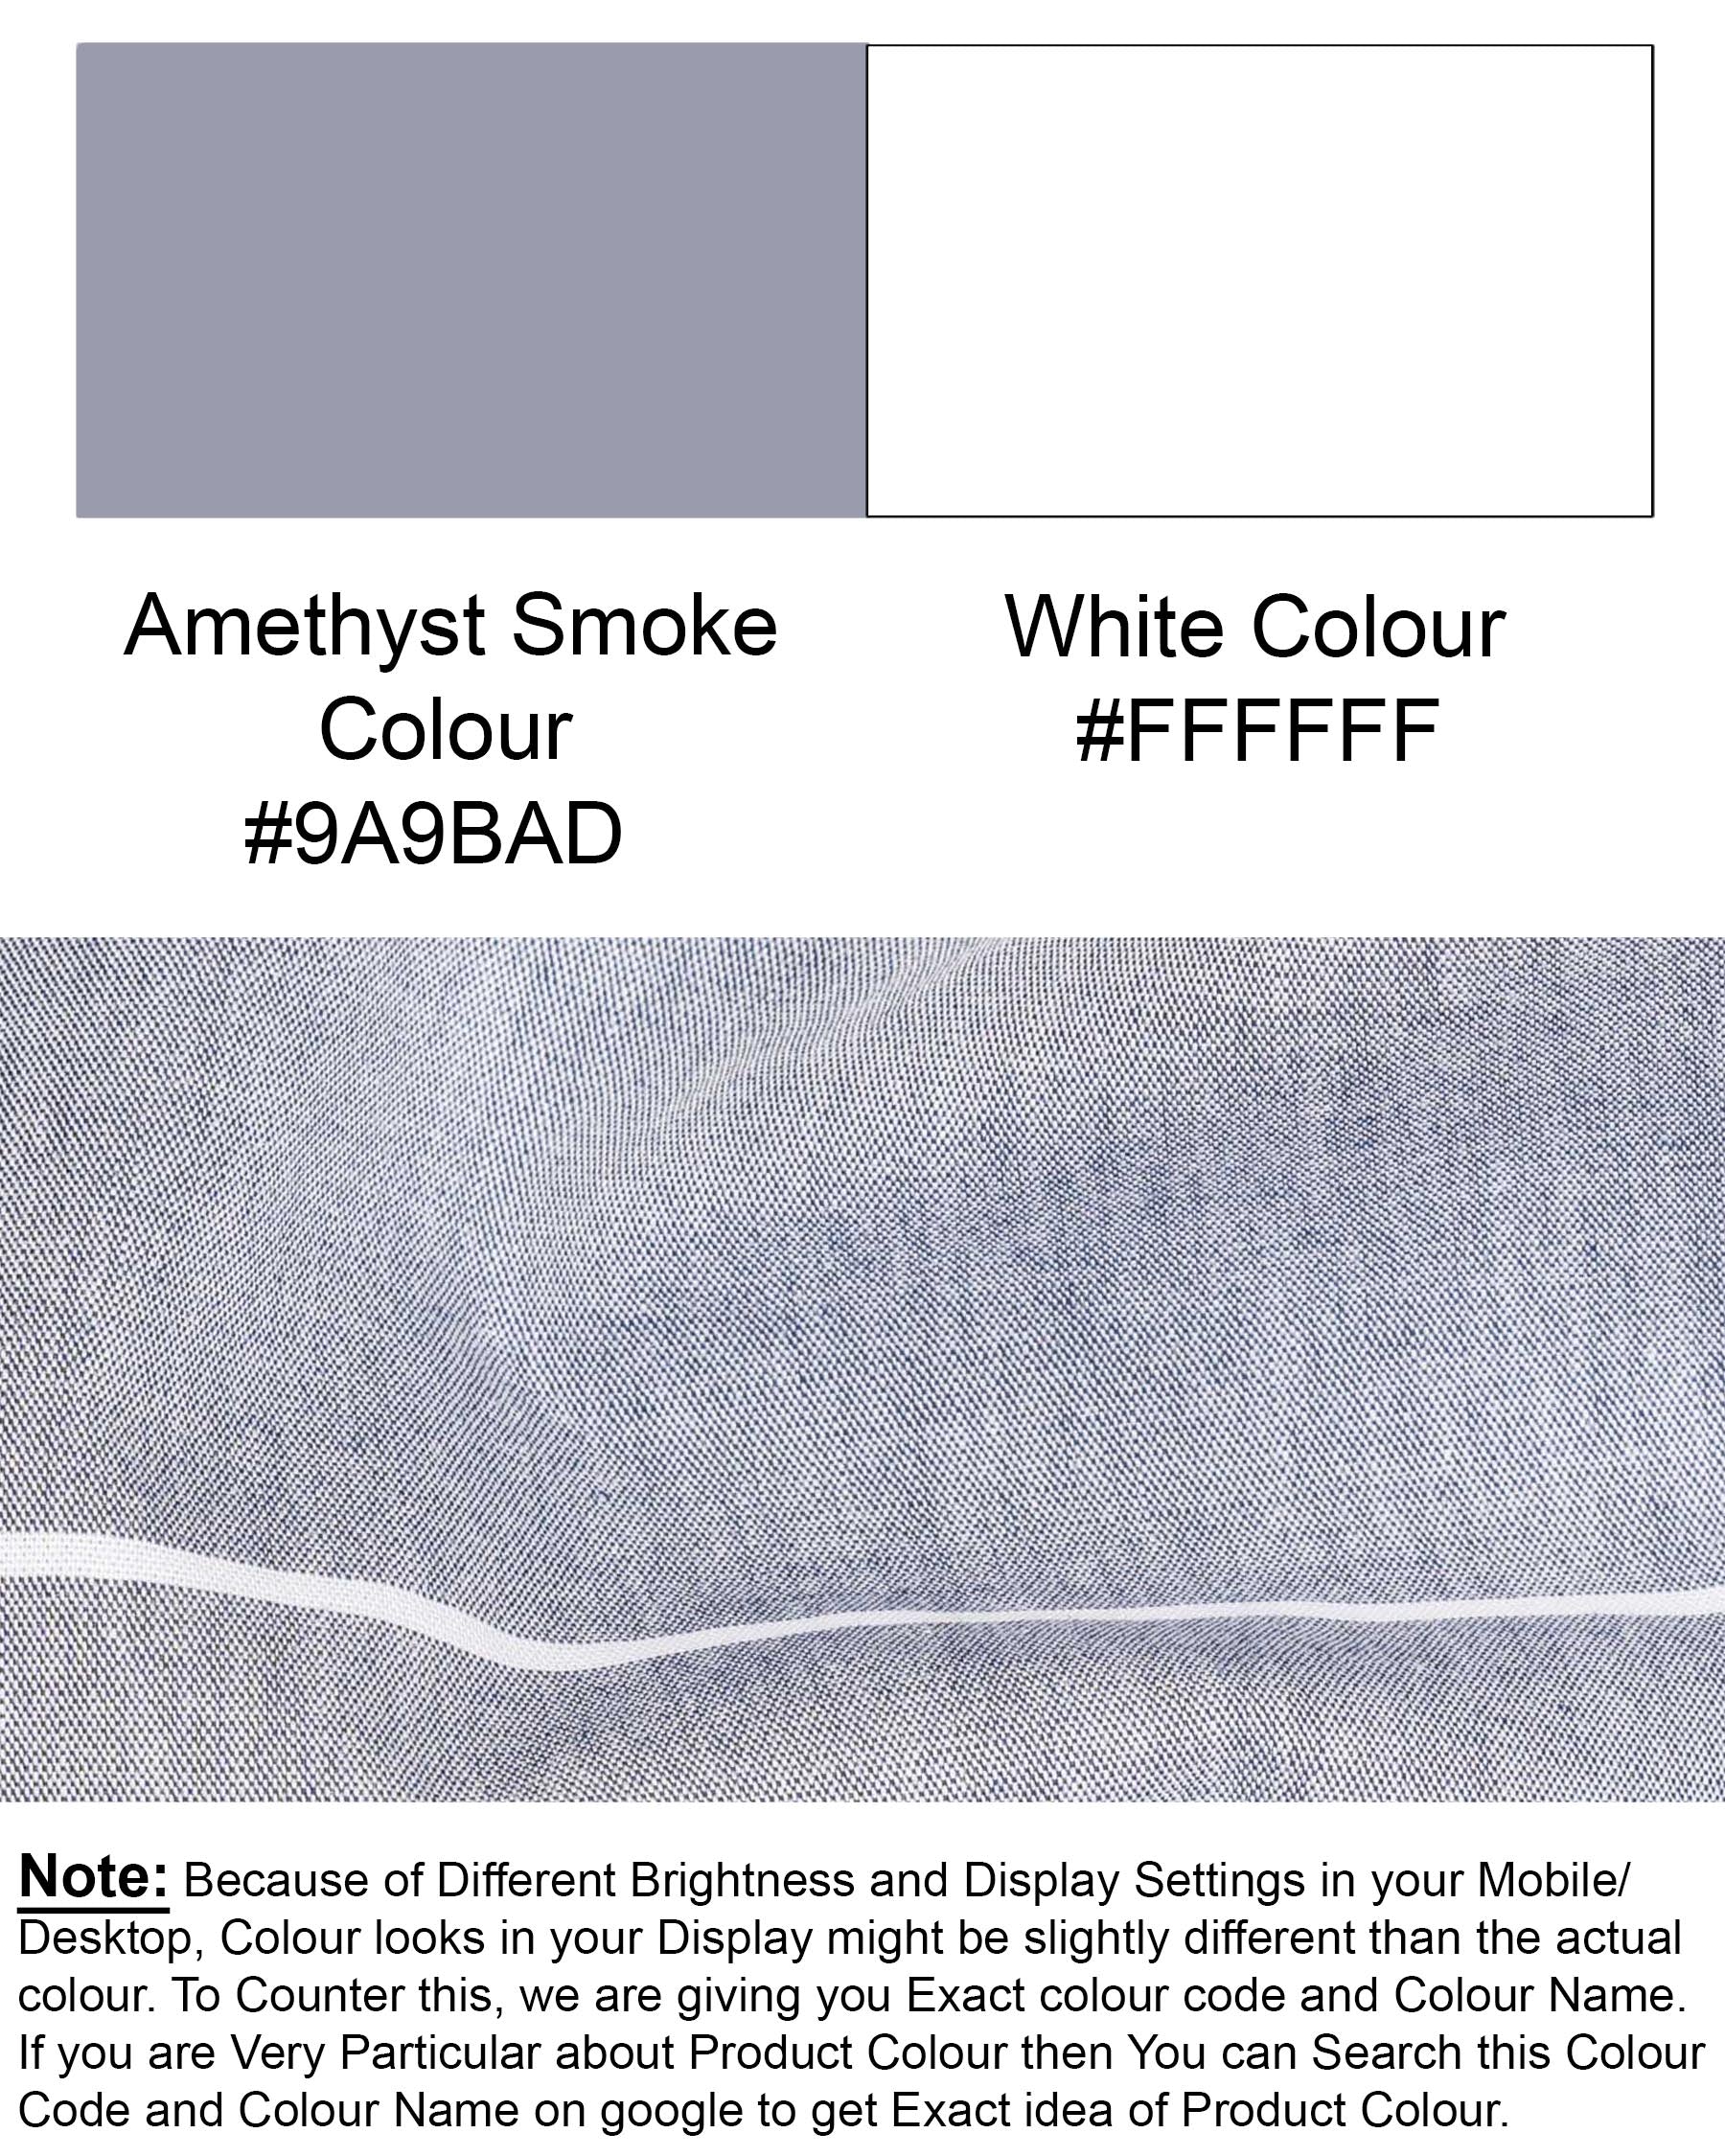 Amethyst Grey and White Striped Premium Cotton Shirt  6832-38,6832-38,6832-39,6832-39,6832-40,6832-40,6832-42,6832-42,6832-44,6832-44,6832-46,6832-46,6832-48,6832-48,6832-50,6832-50,6832-52,6832-52